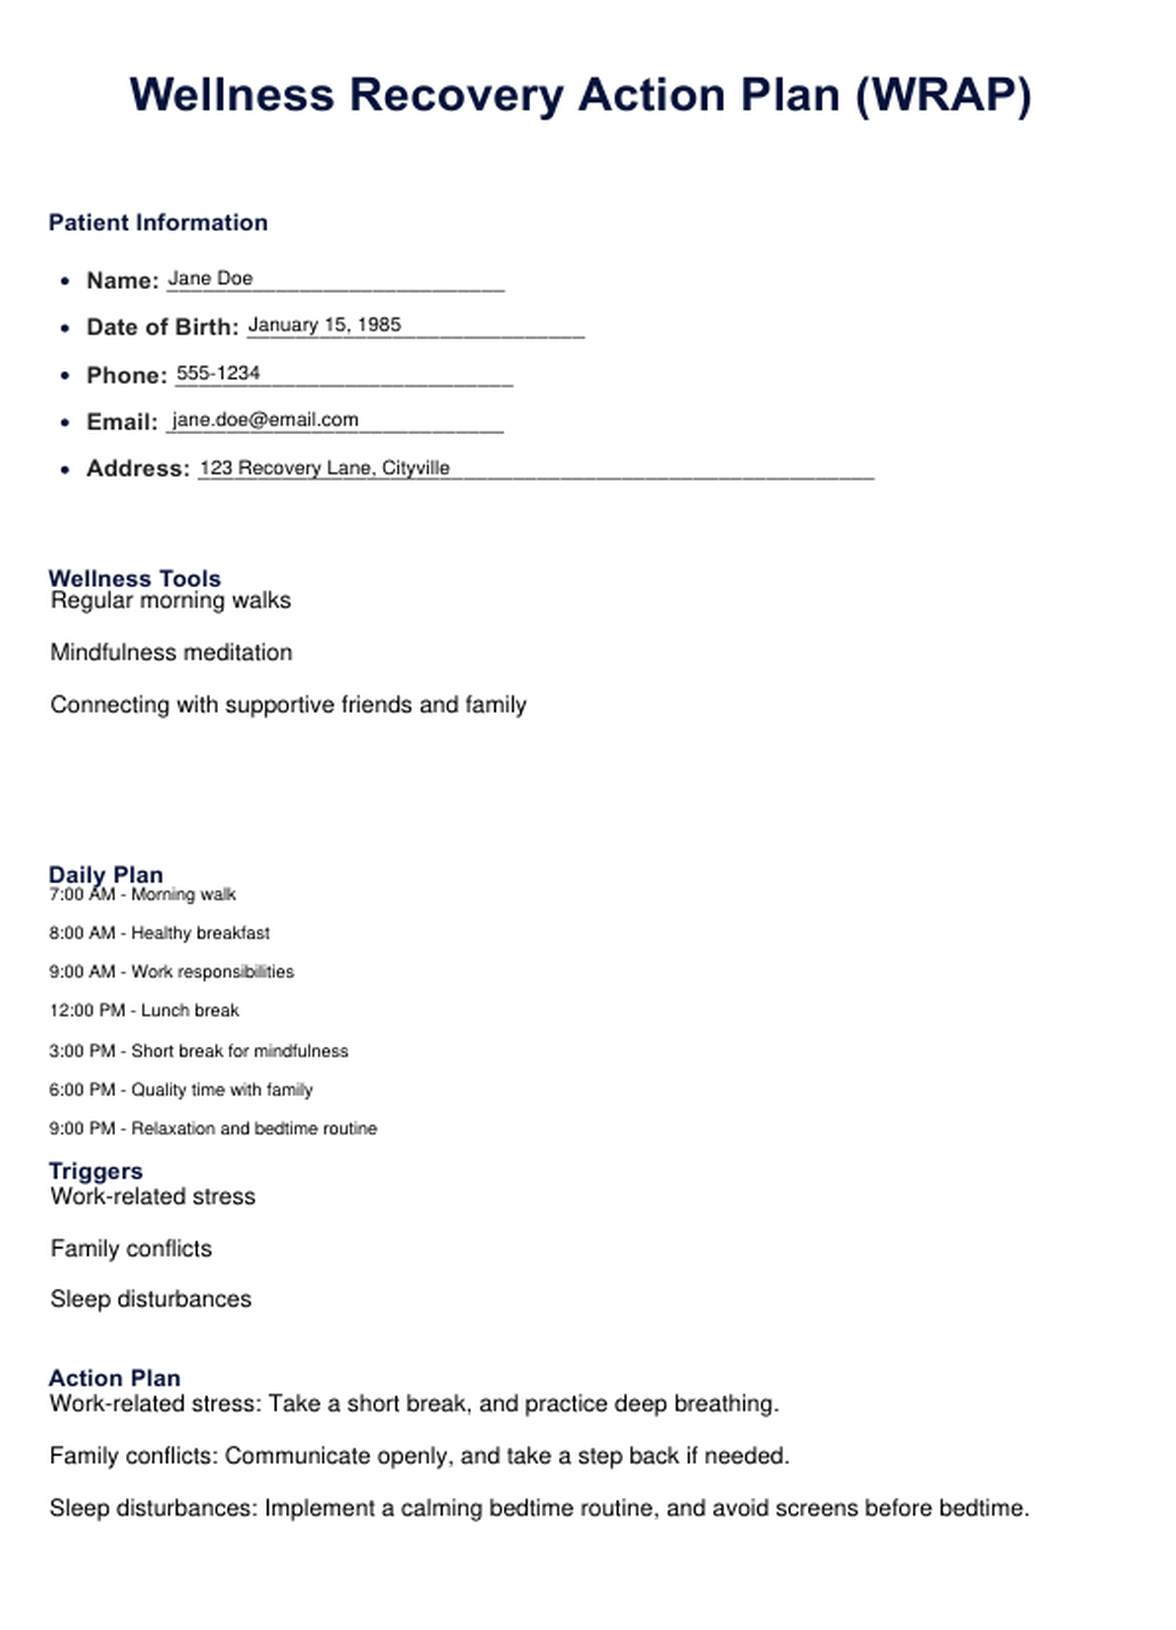 WRAP Plan PDF Example